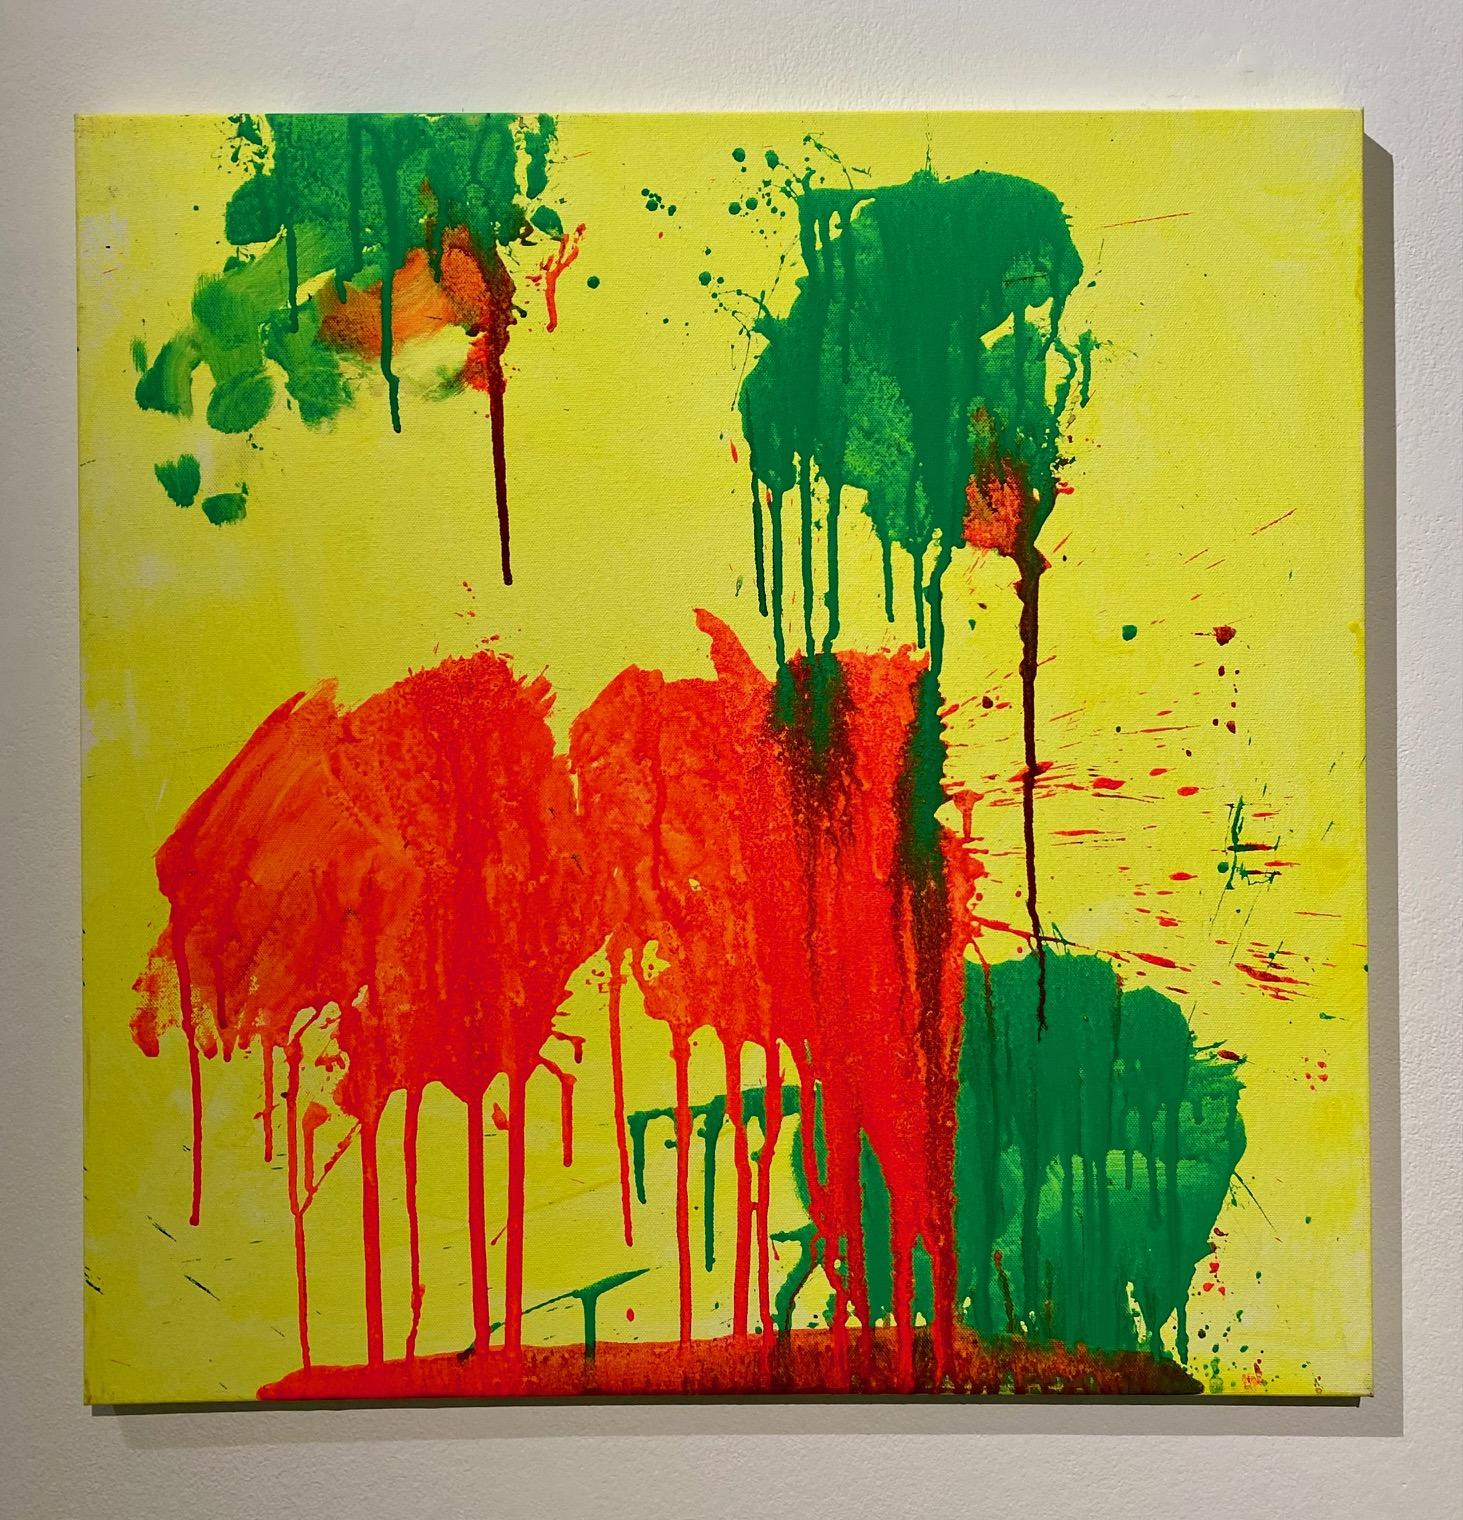 Abstract Painting Ushio Shinohara - « Red and Green on Yellow », peinture acrylique sur toile - Peinture abstraite de boxe